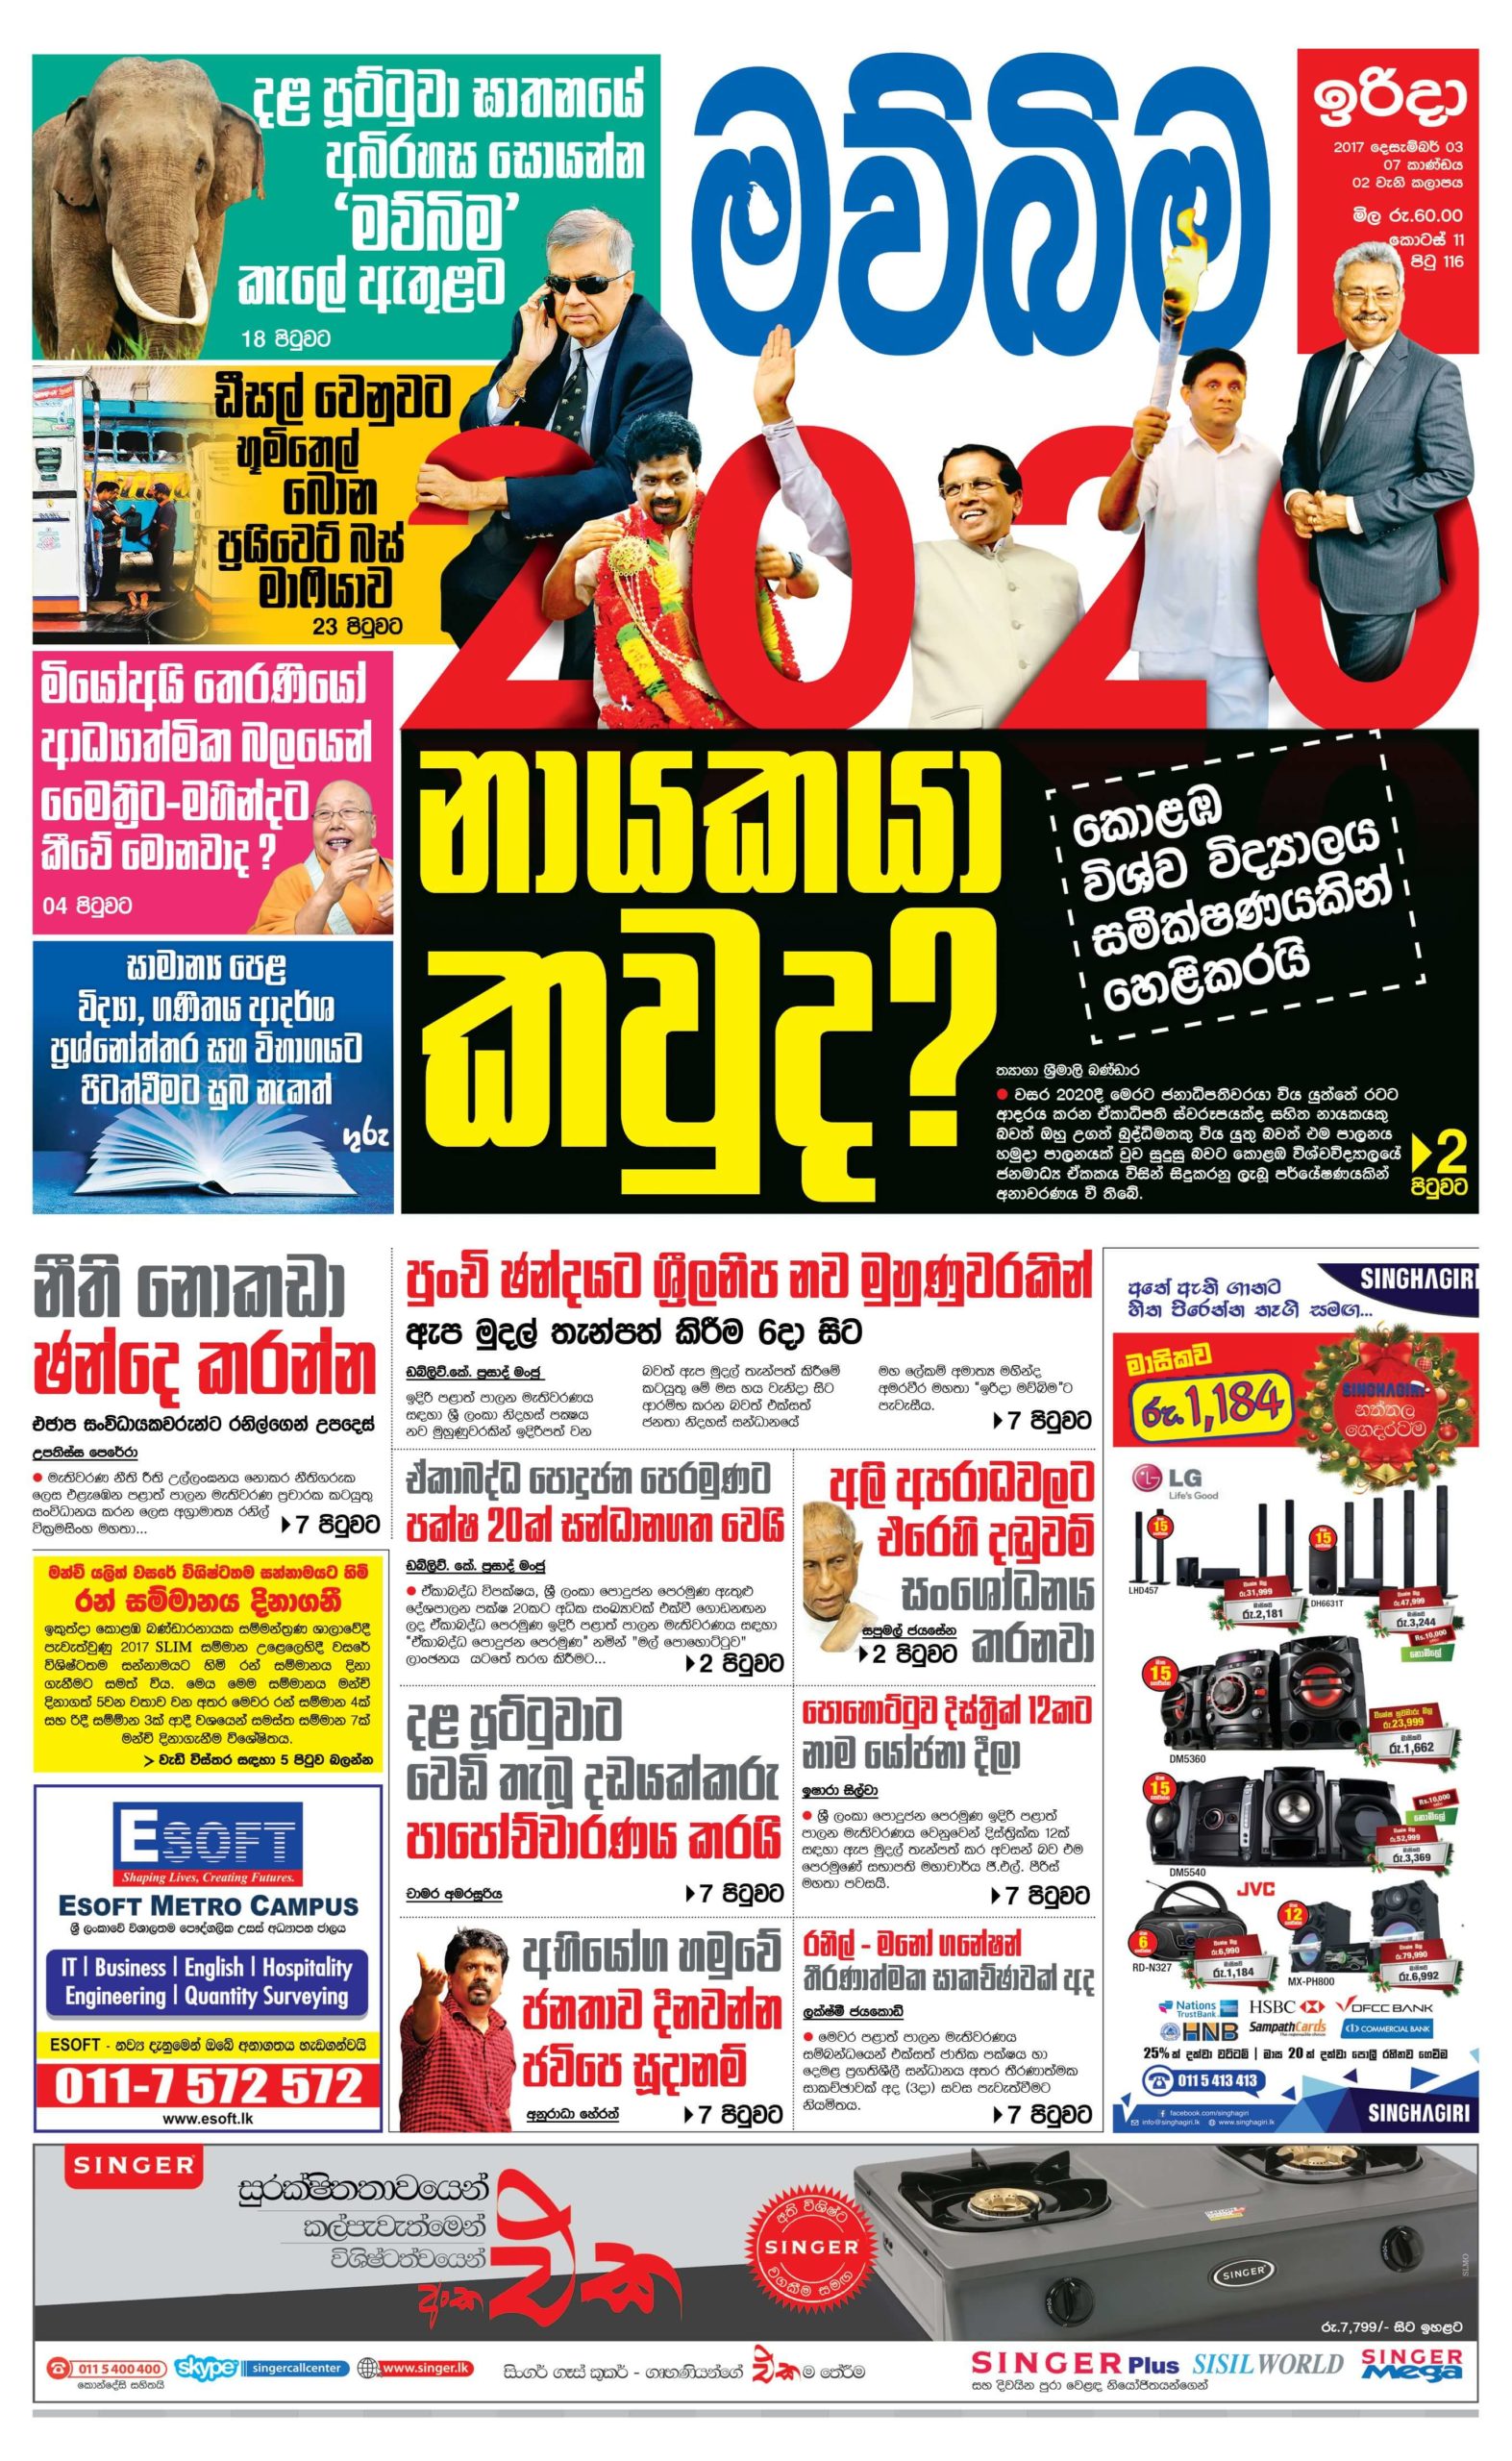 Srilanka Newspapers 4 Mawbima scaled